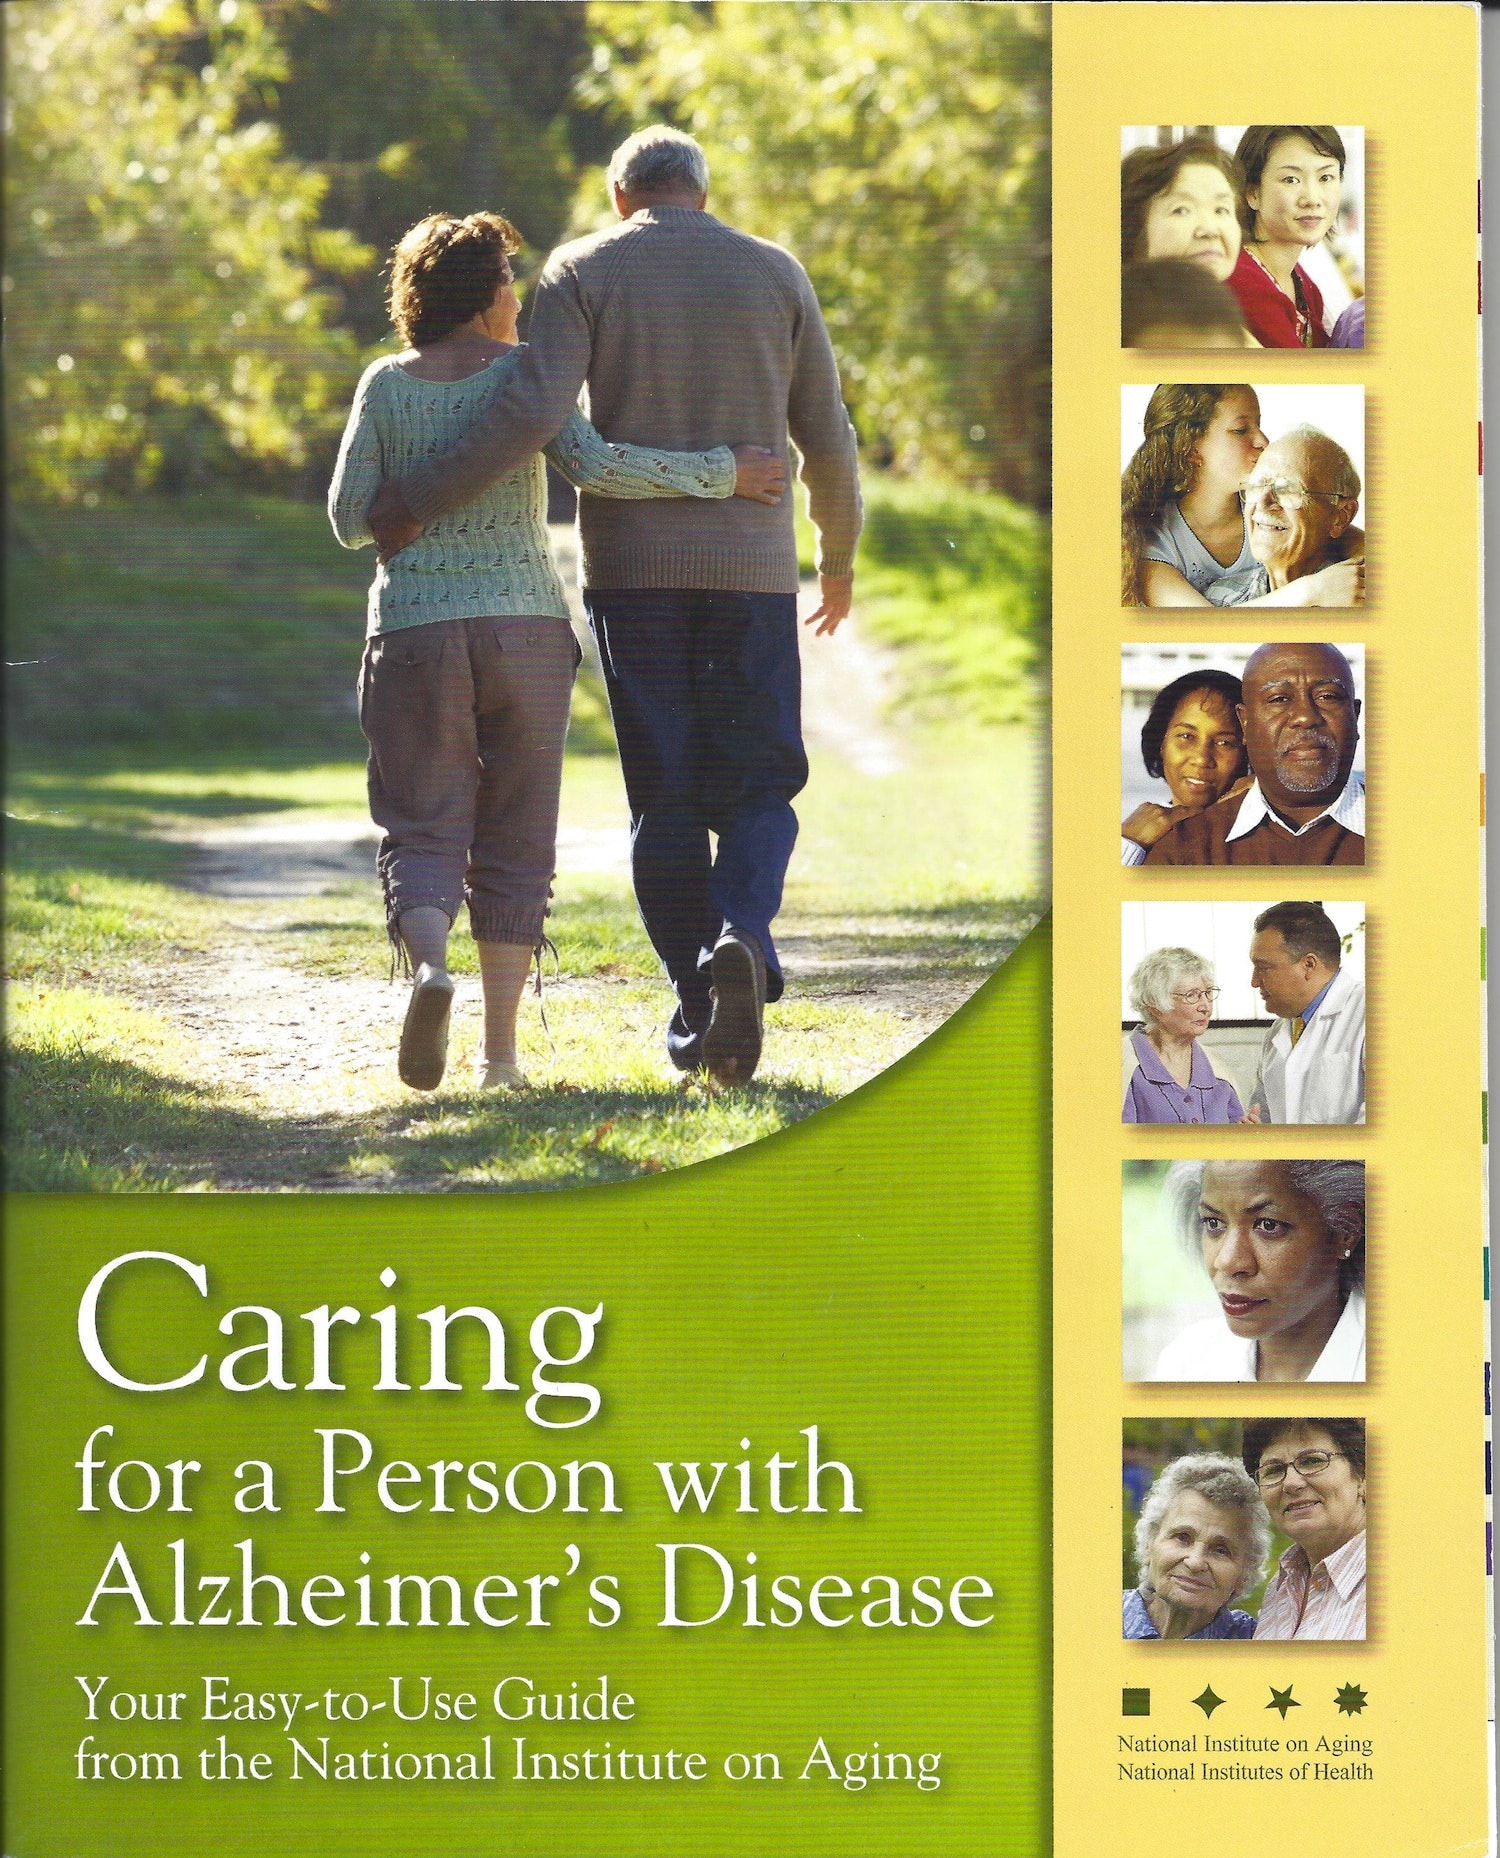 Alzheimerâs and Dementia Resource